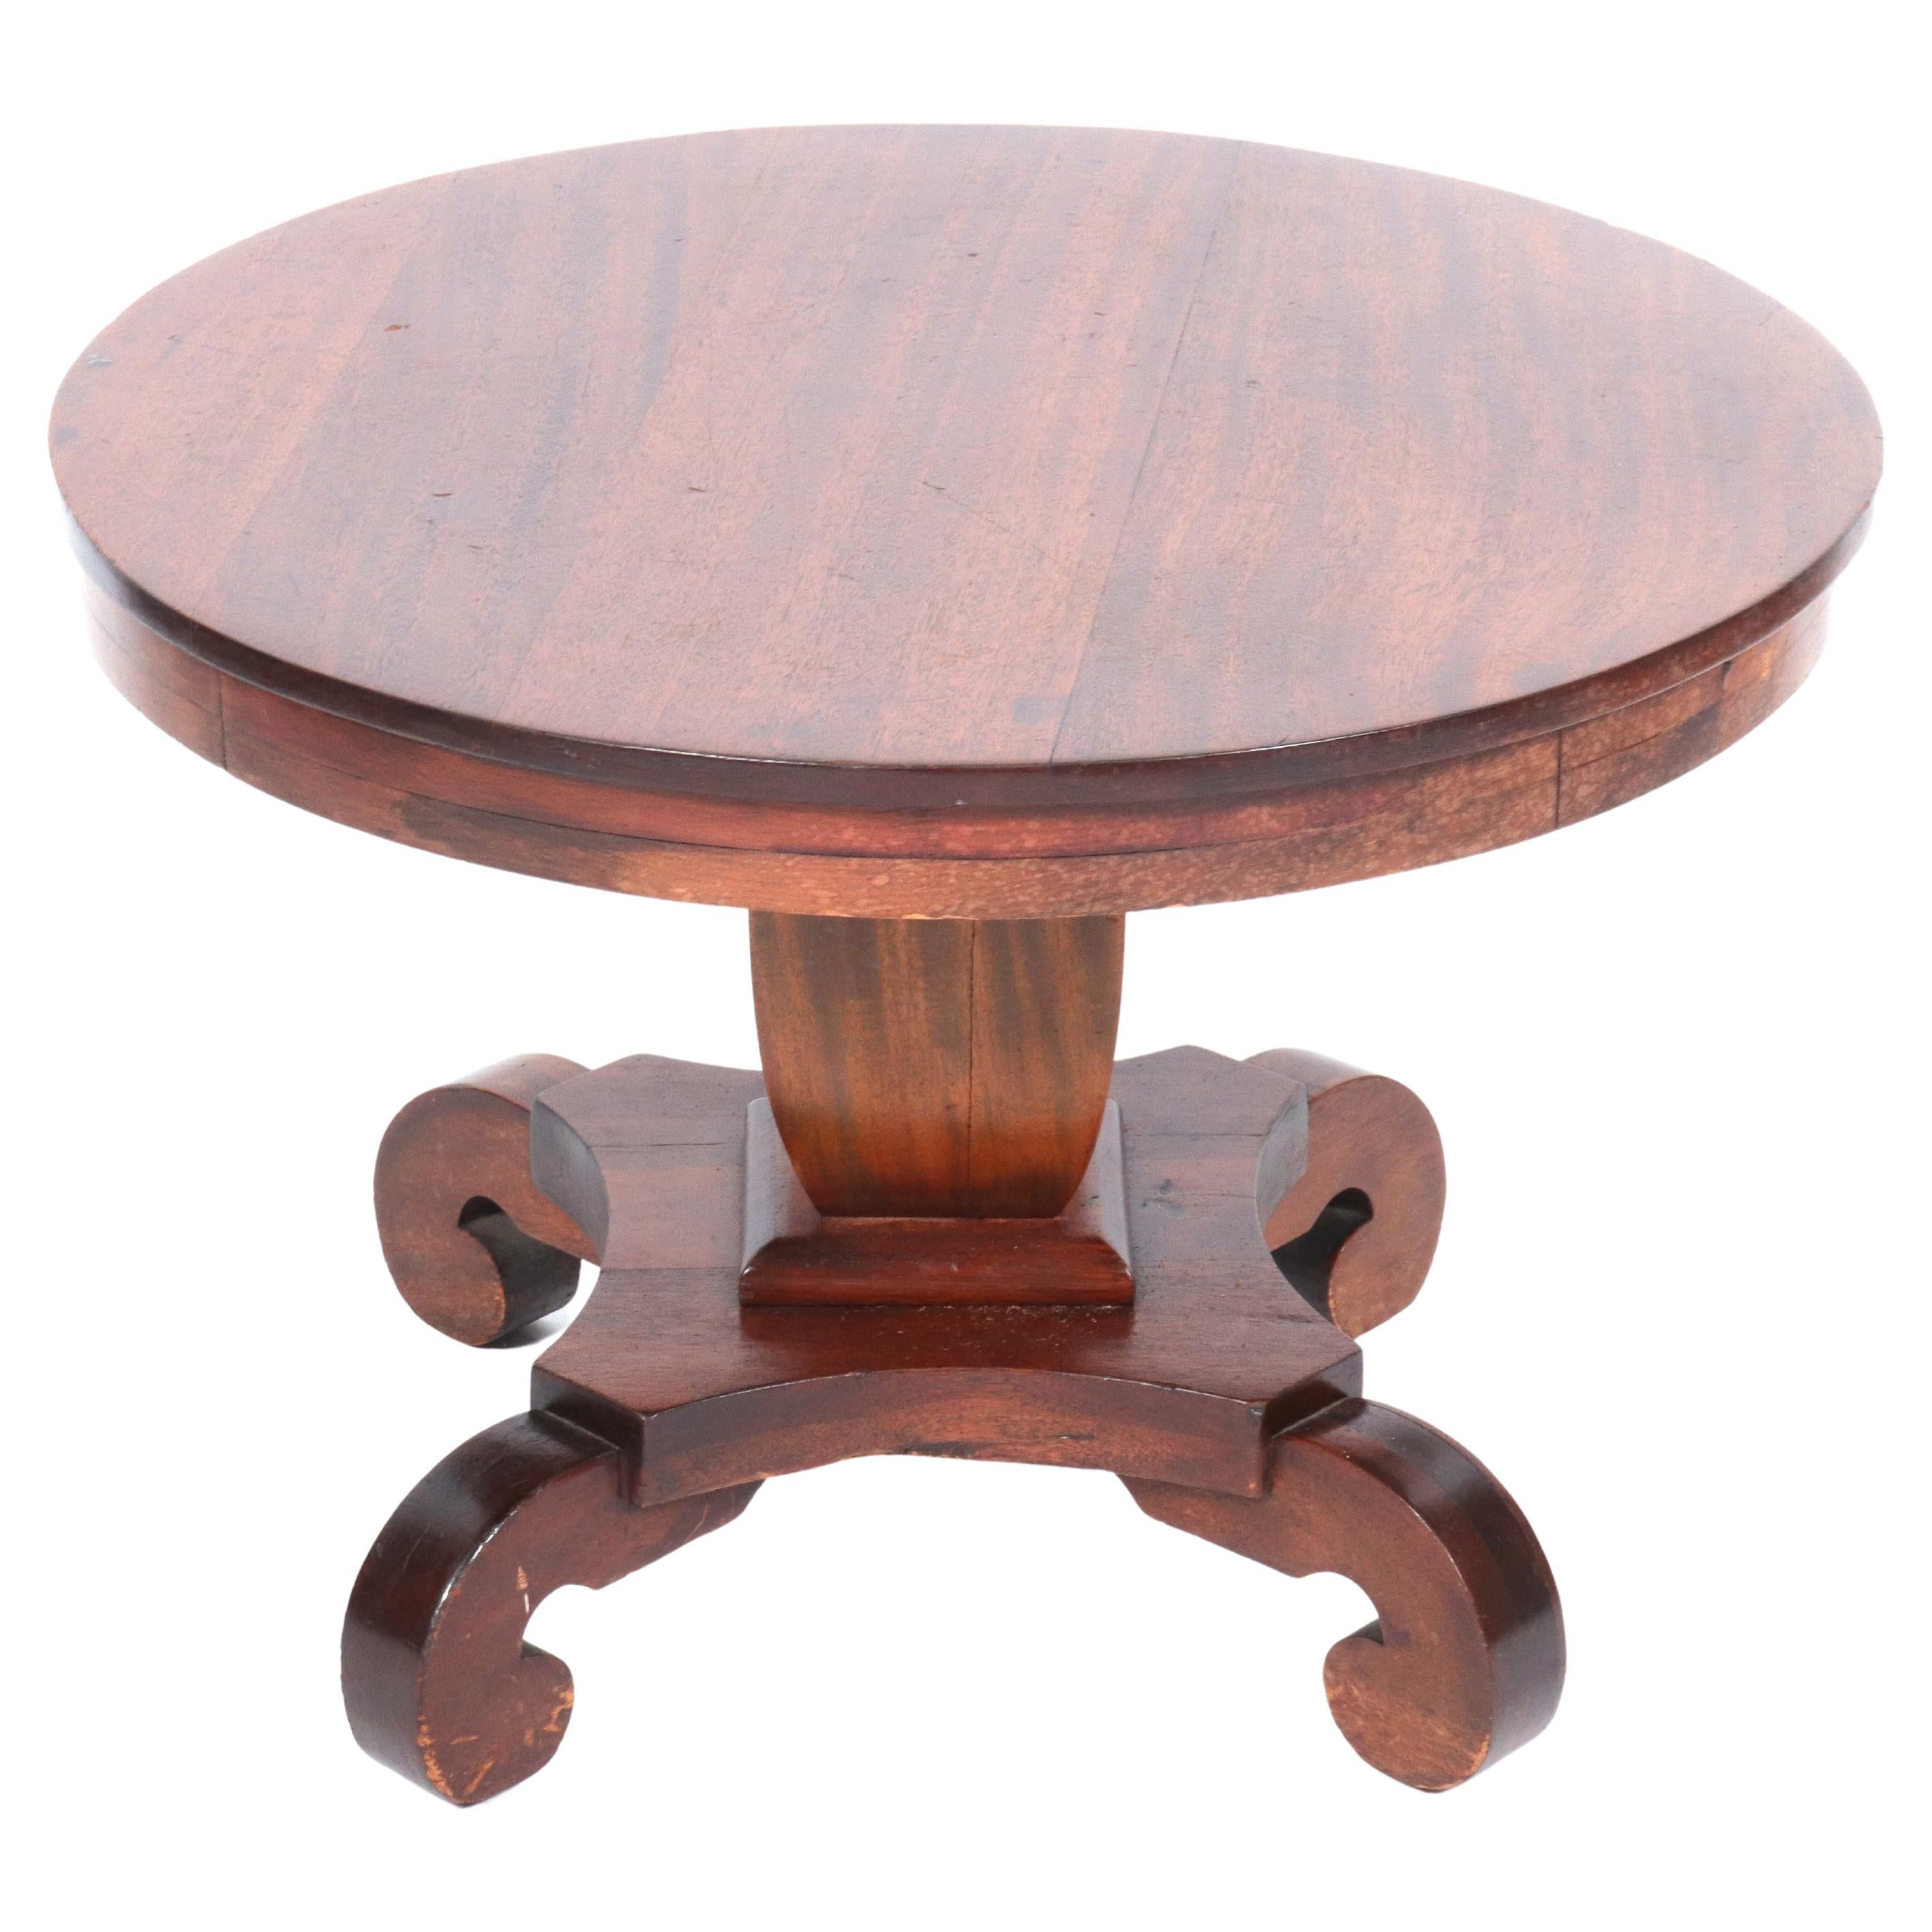 Biedermeier Manner Round Pedestal Occasional Table